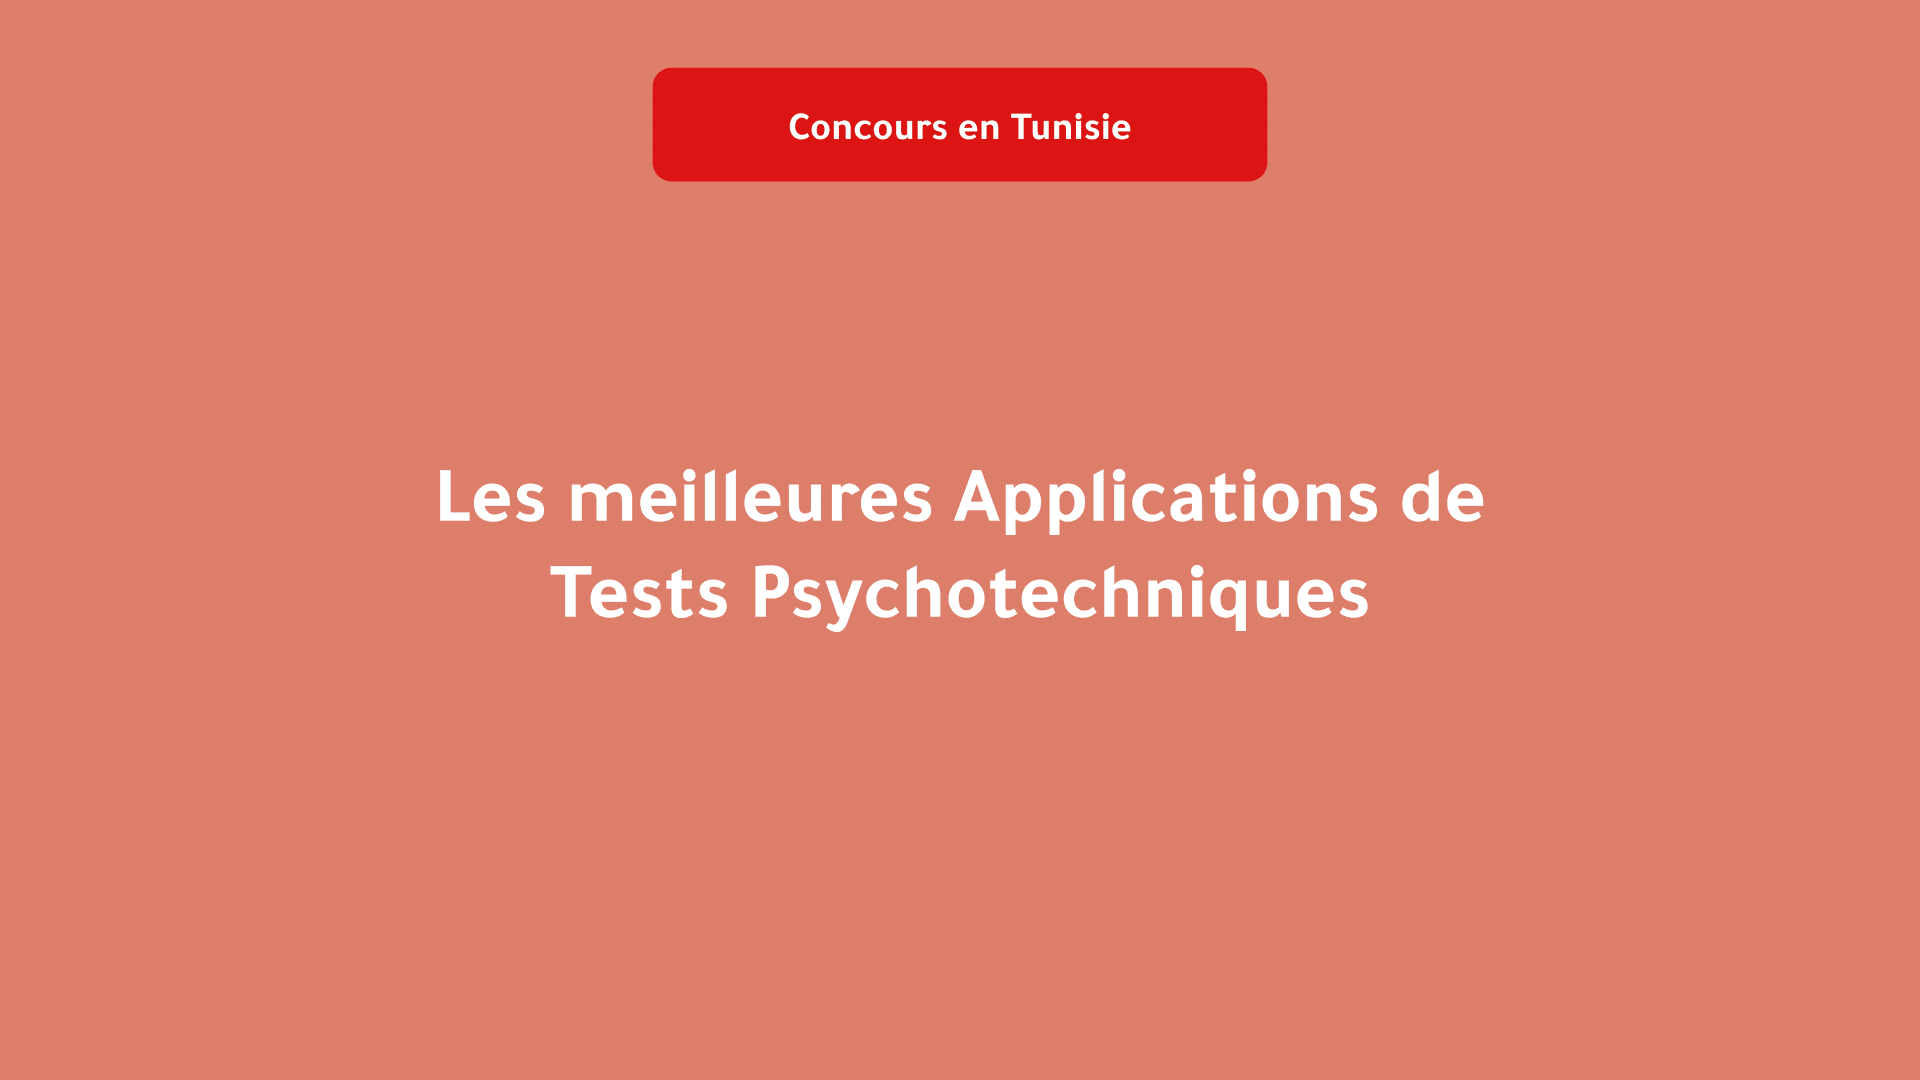 Applications de Tests Psychotechniques